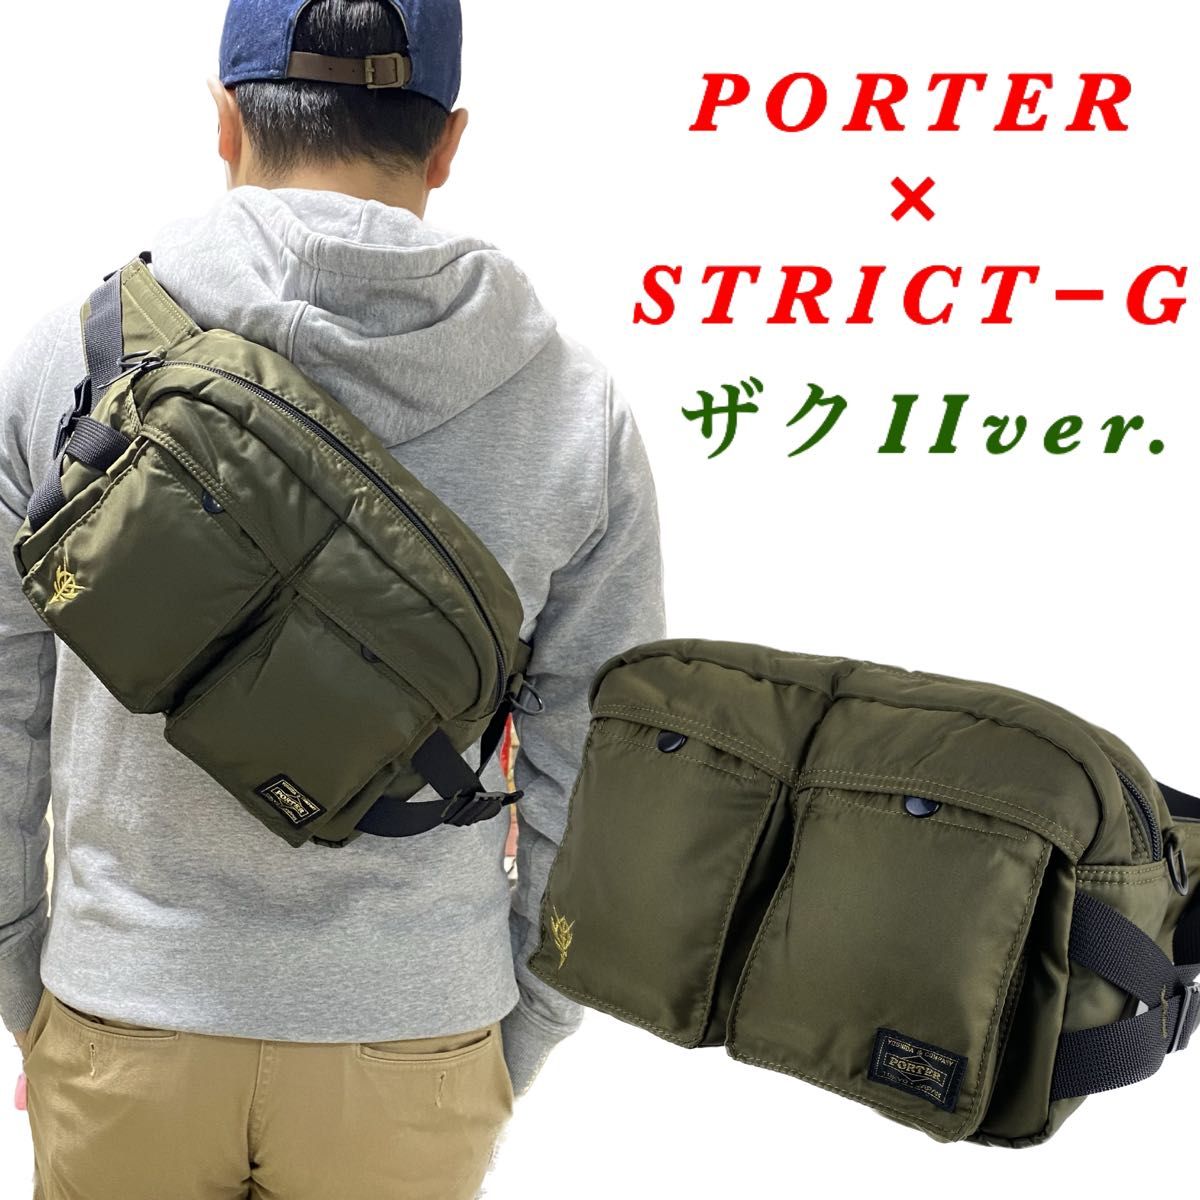 PORTER × STRICT−G / ウエストバッグ / ザクIIver. ポーター ガンダム